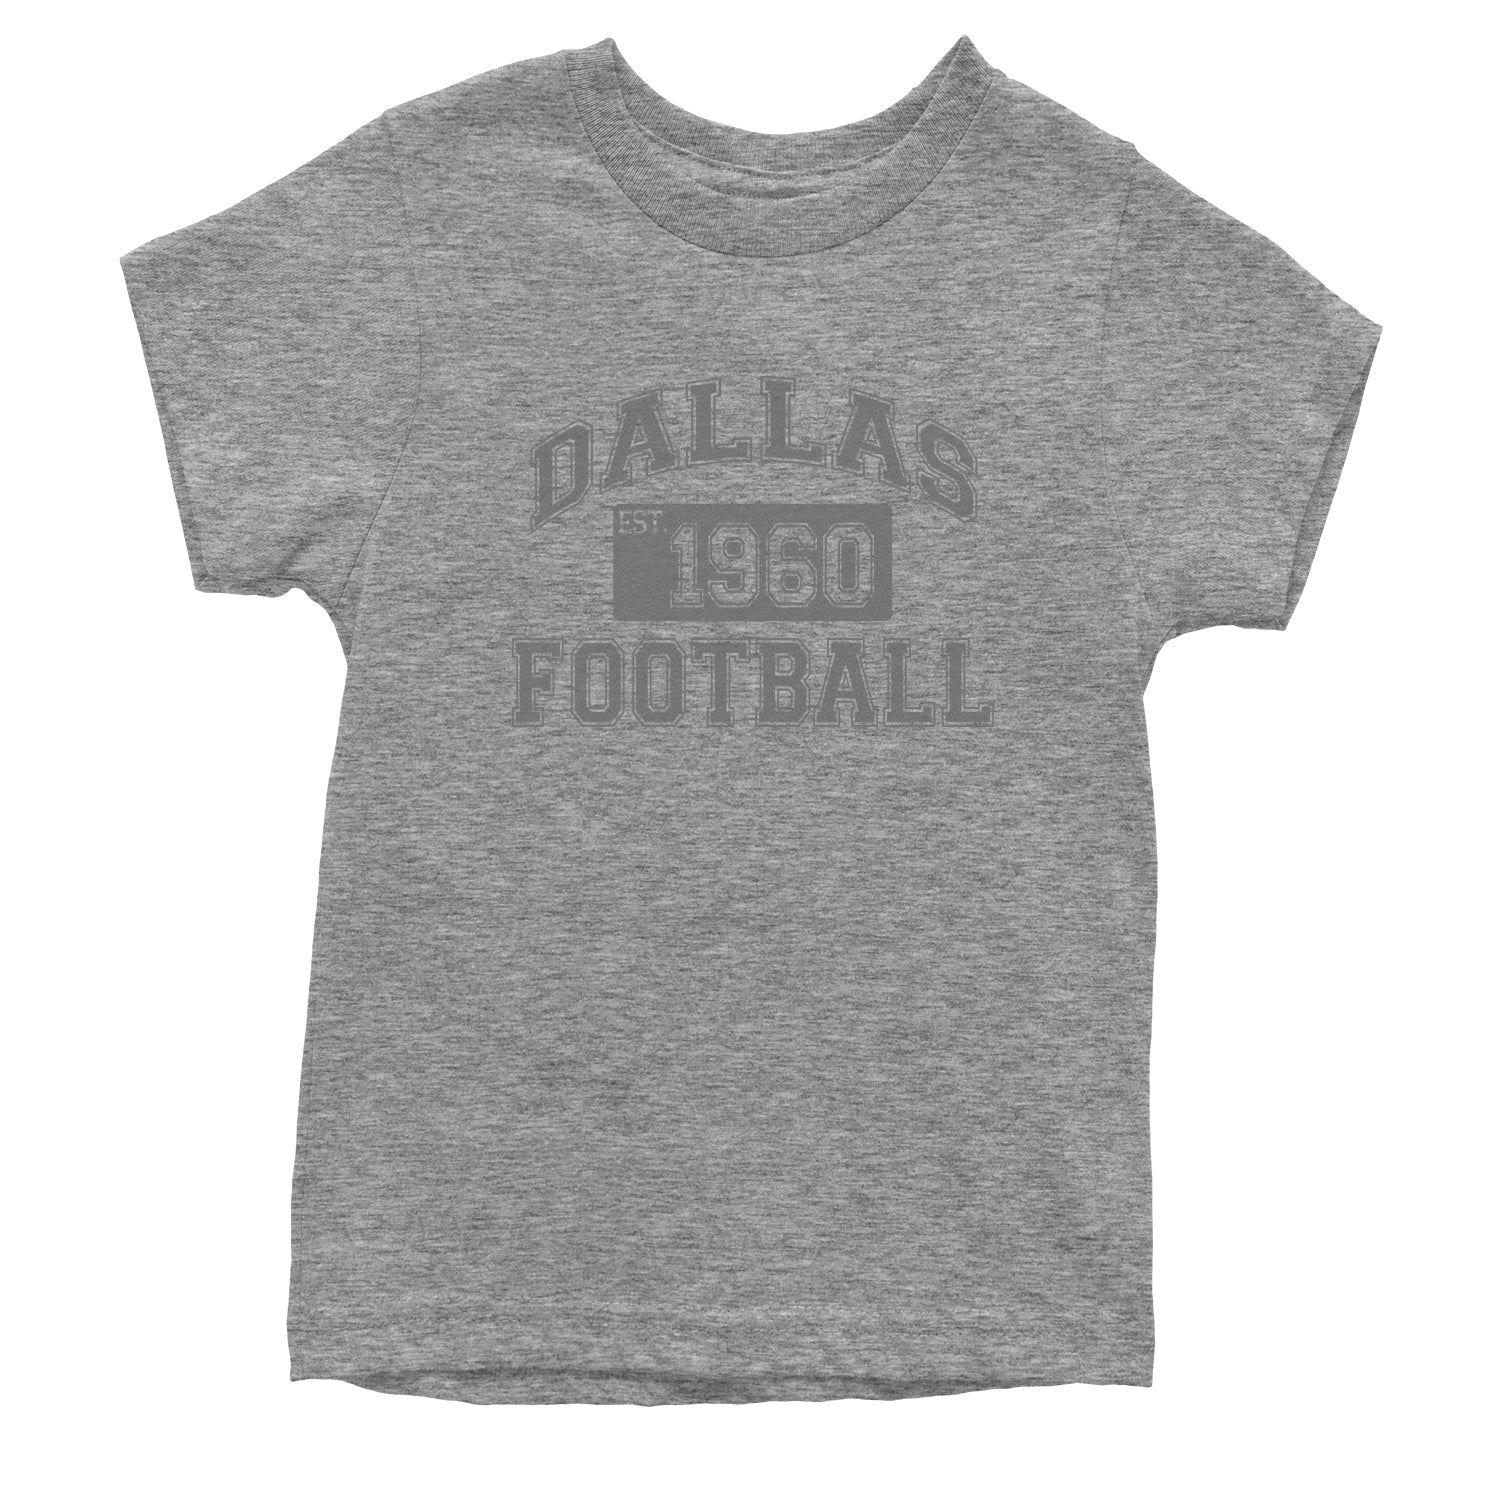 Dallas Football Established 1960 Youth T-shirt boys, dem by Expression Tees